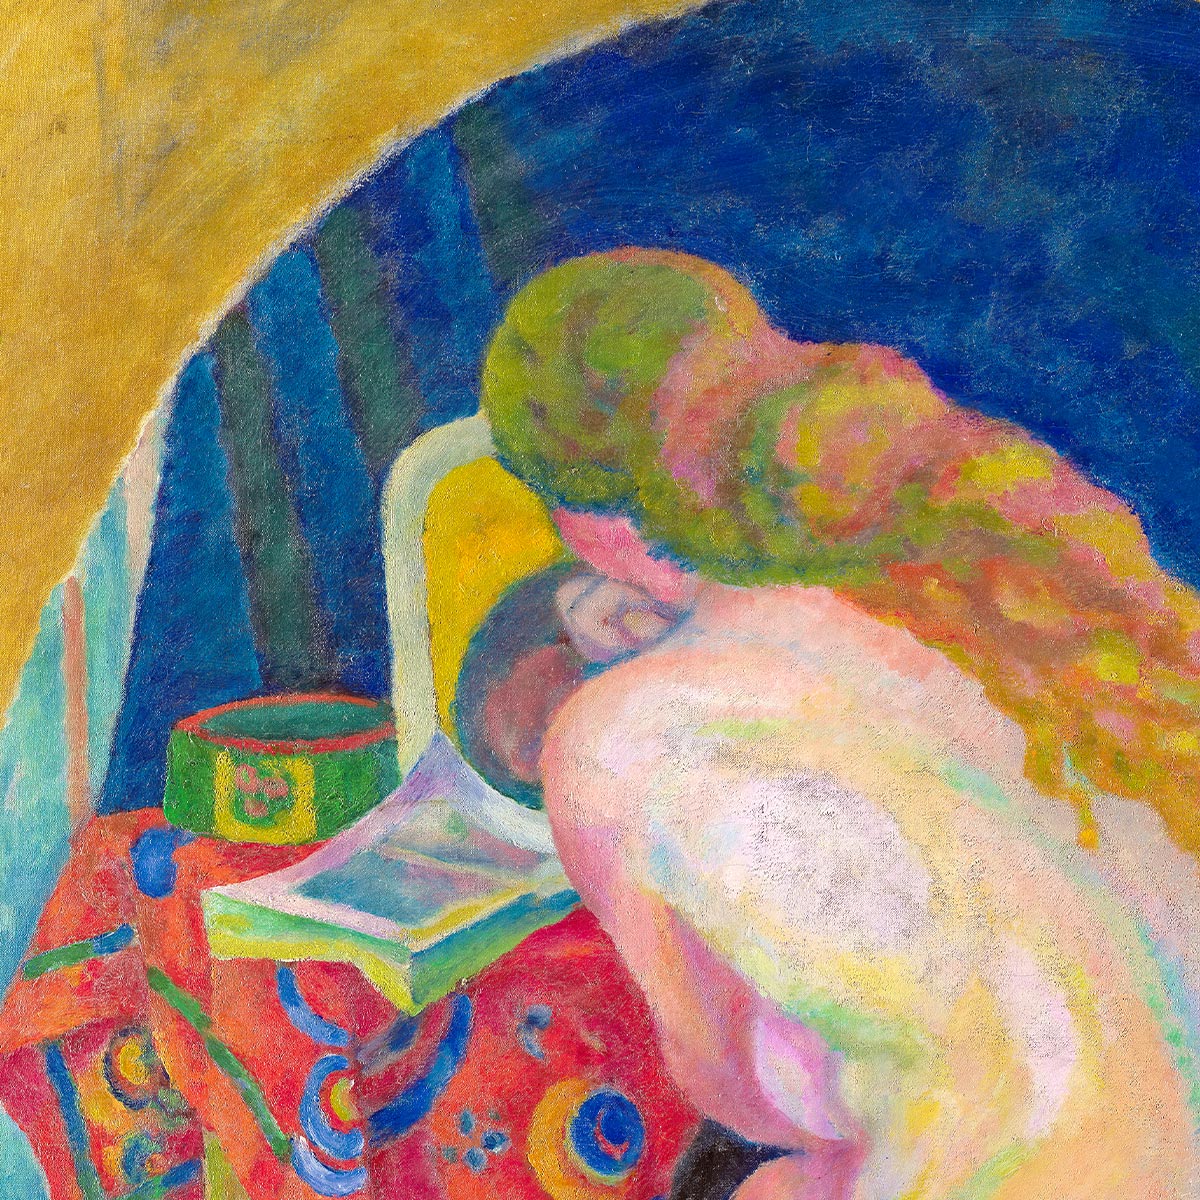 Nude Woman Reading Art Print by Robert Delauney